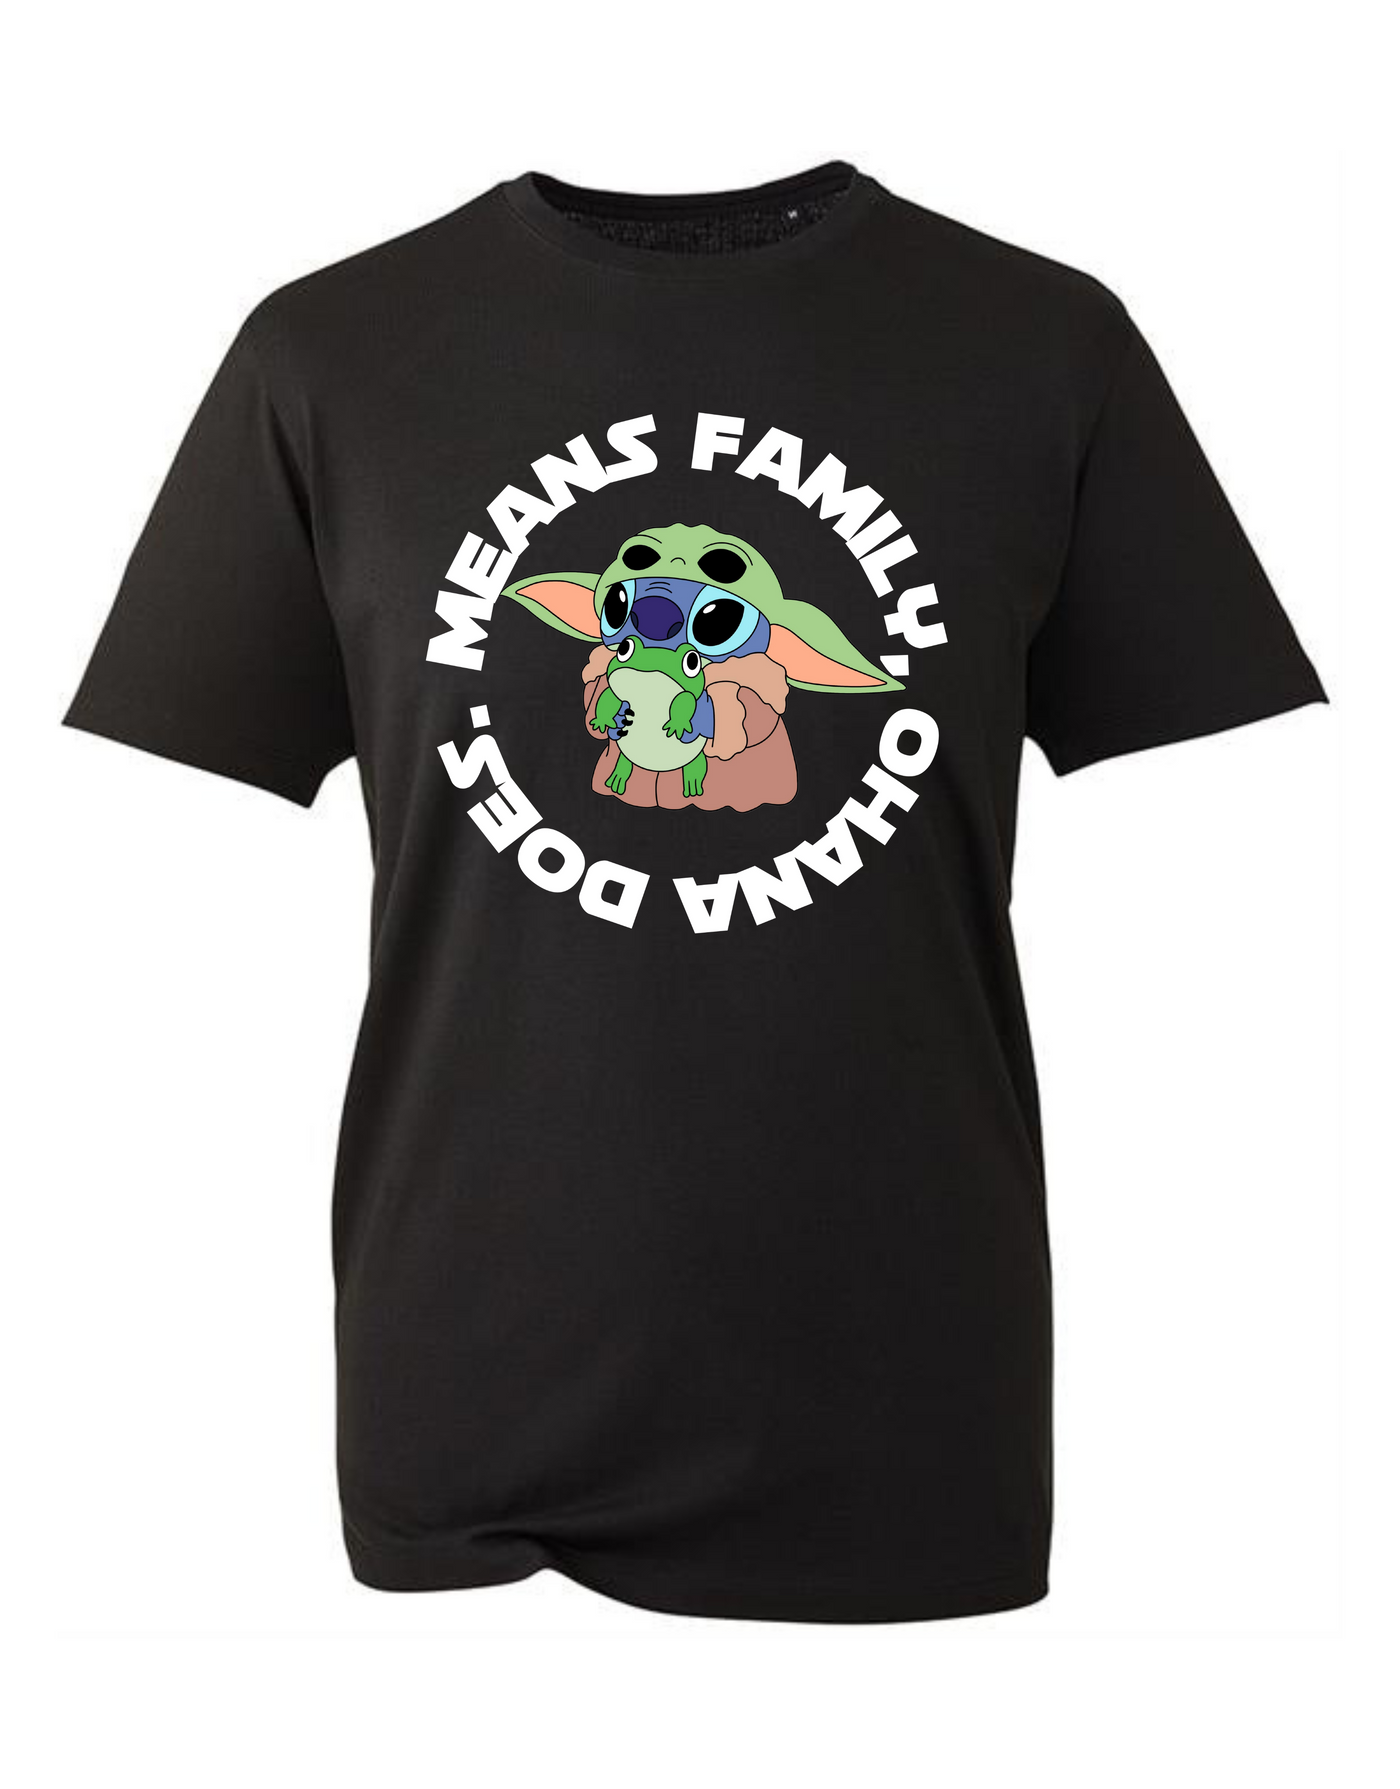 Stitch & Yoda "Means Family" Organic T-Shirt